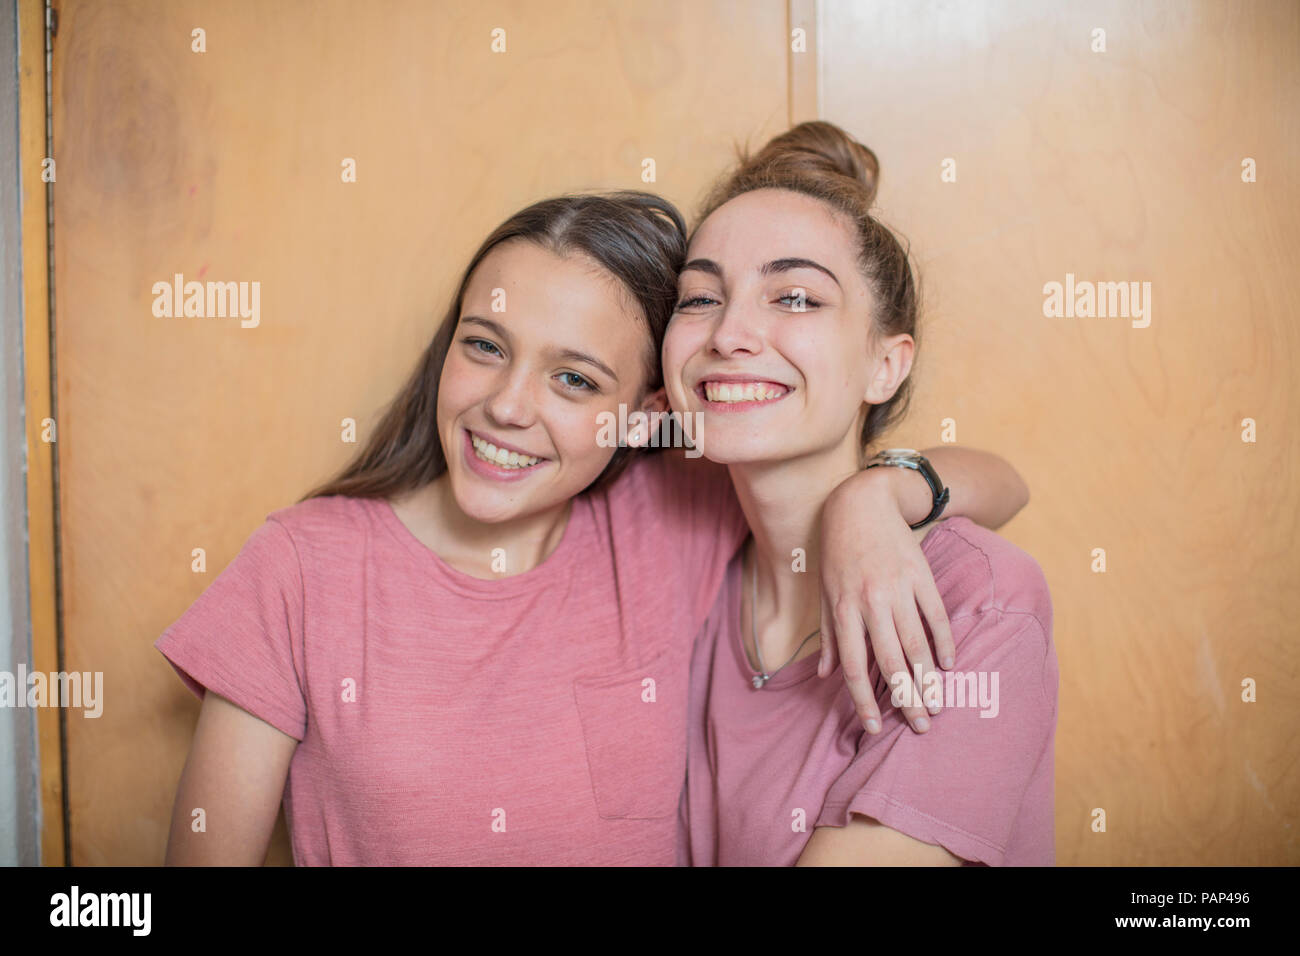 Portrait of two smiling teenage girls hugging Stock Photo